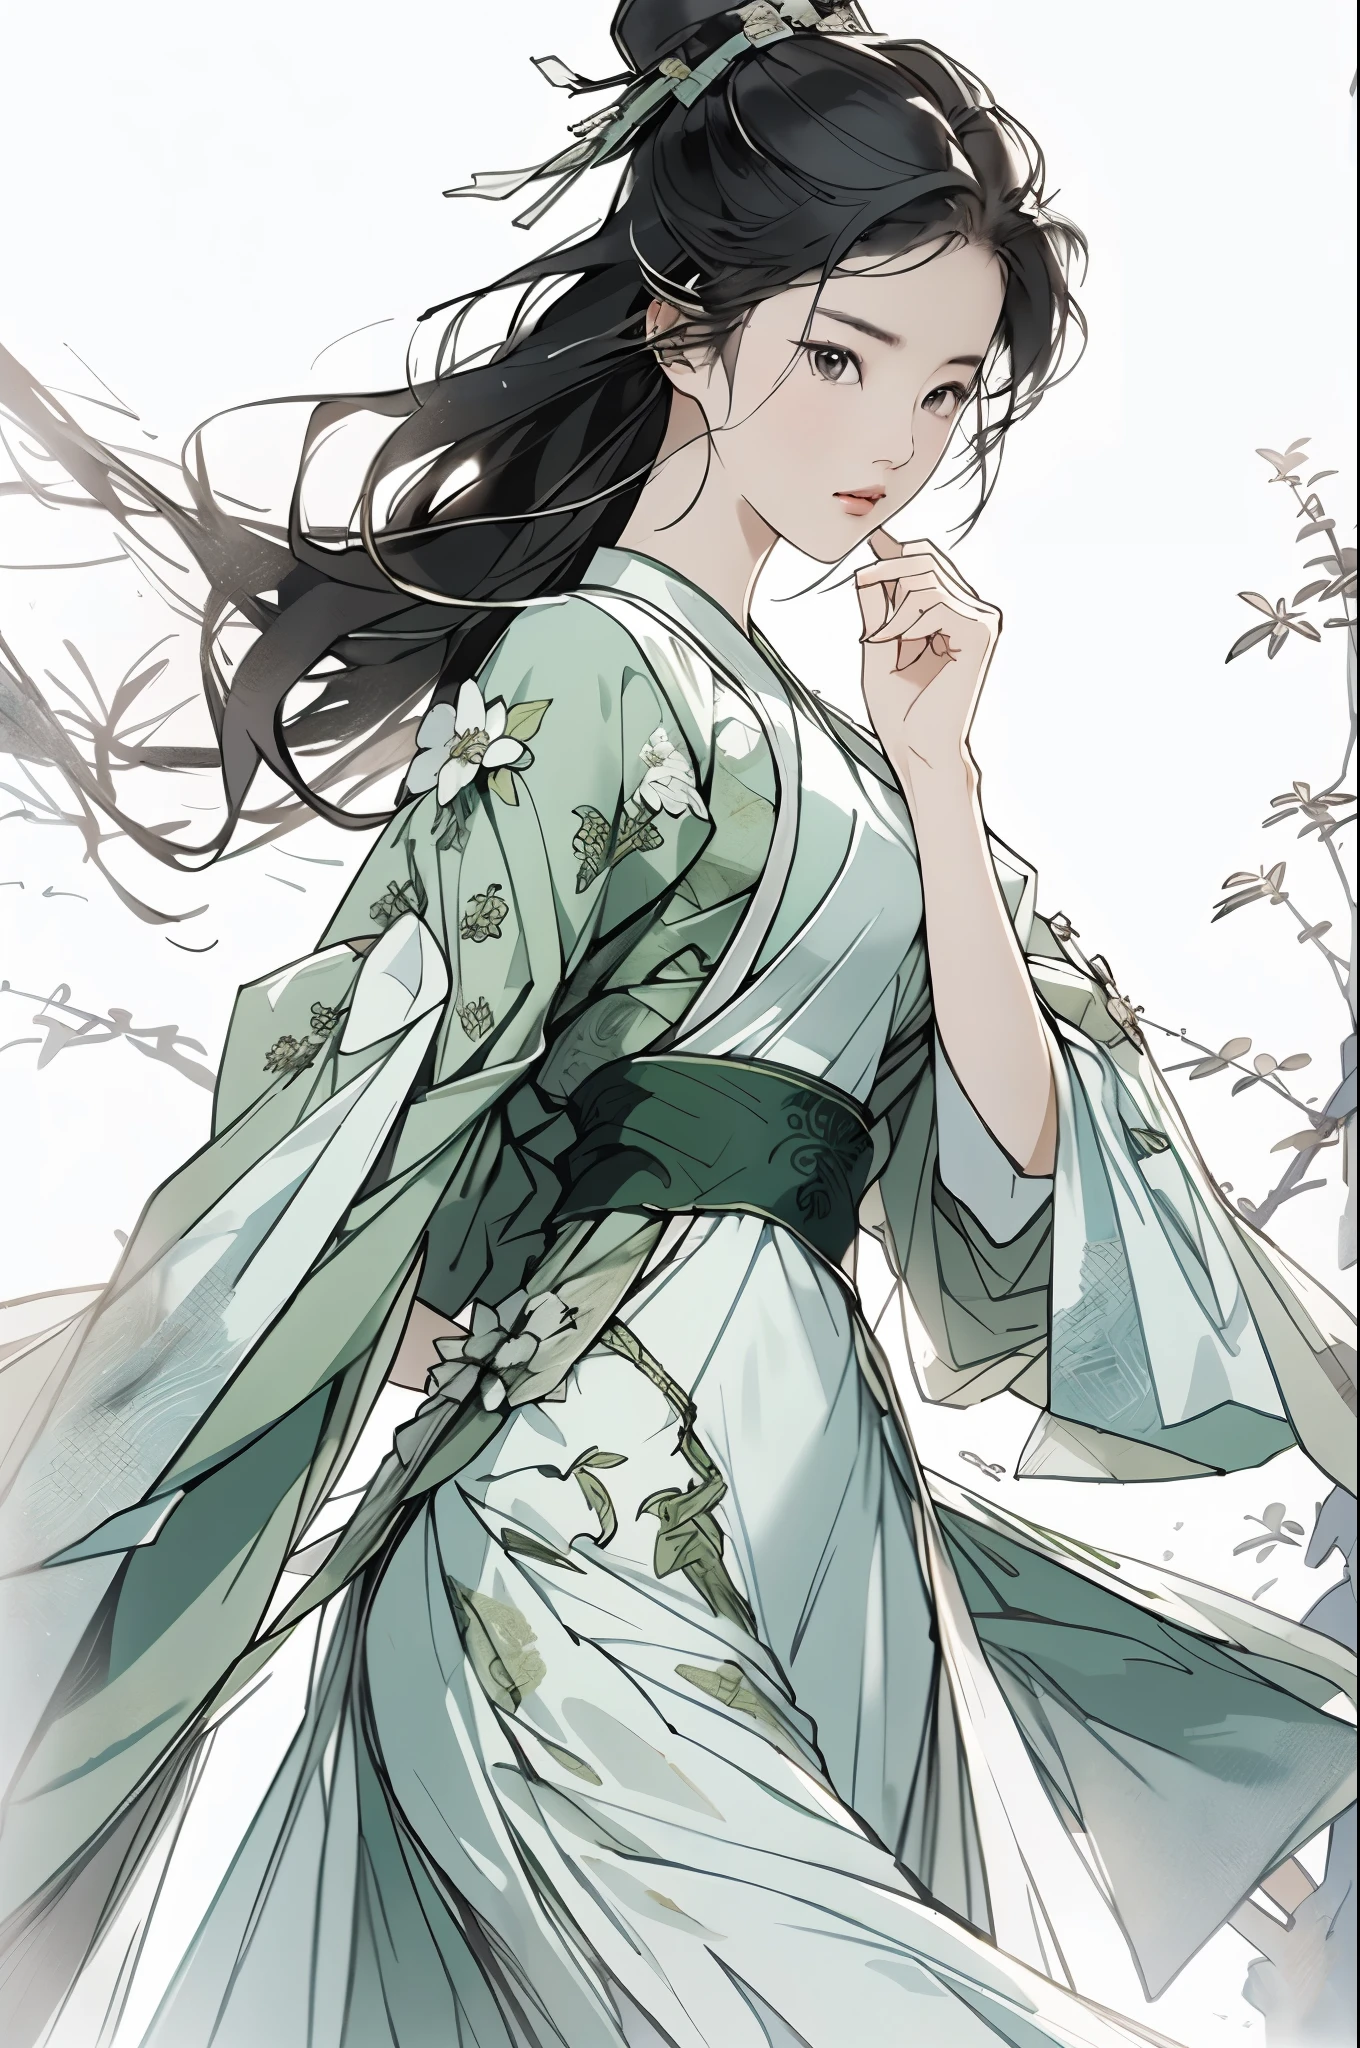 liuyifei, 1 chica, Solo, vestido chino tradicional verde, pose de kung fu, fondo sencillo, Fondo blanco, Gongbihua